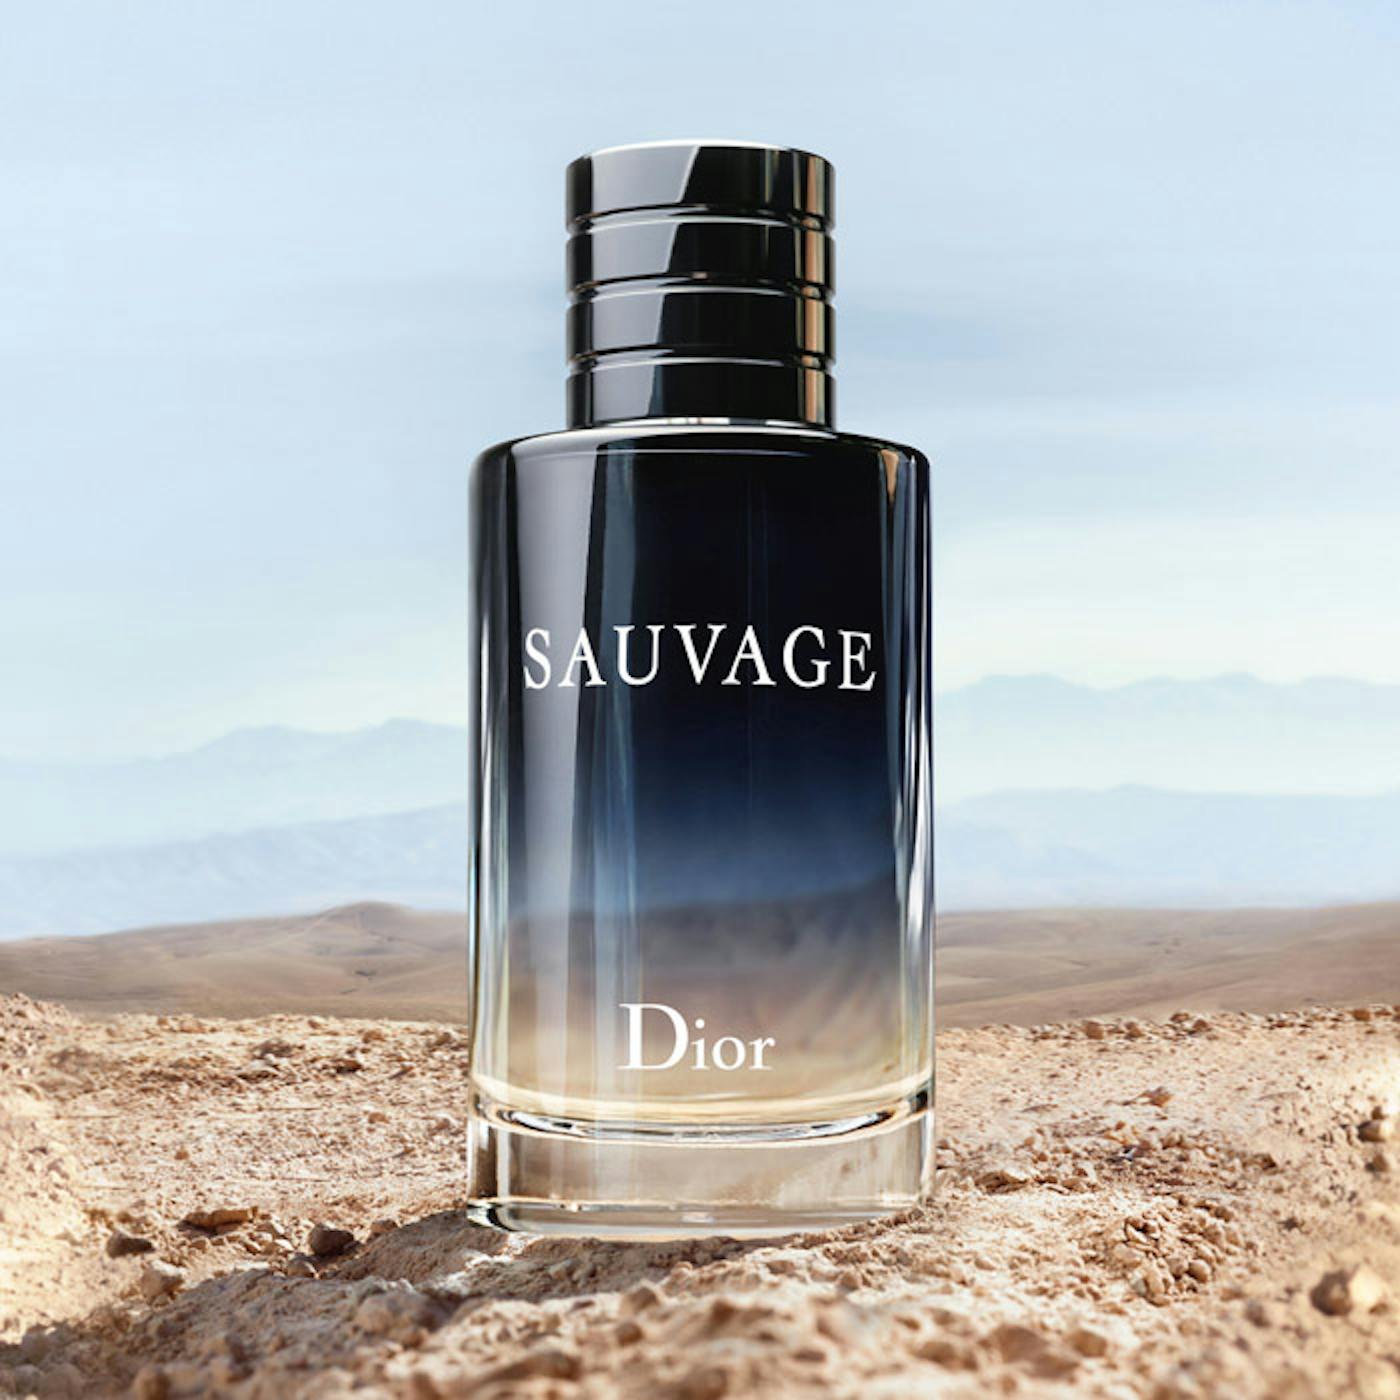 Dior Christian Dior Men's Eau Sauvage Extreme Intense EDT Spray